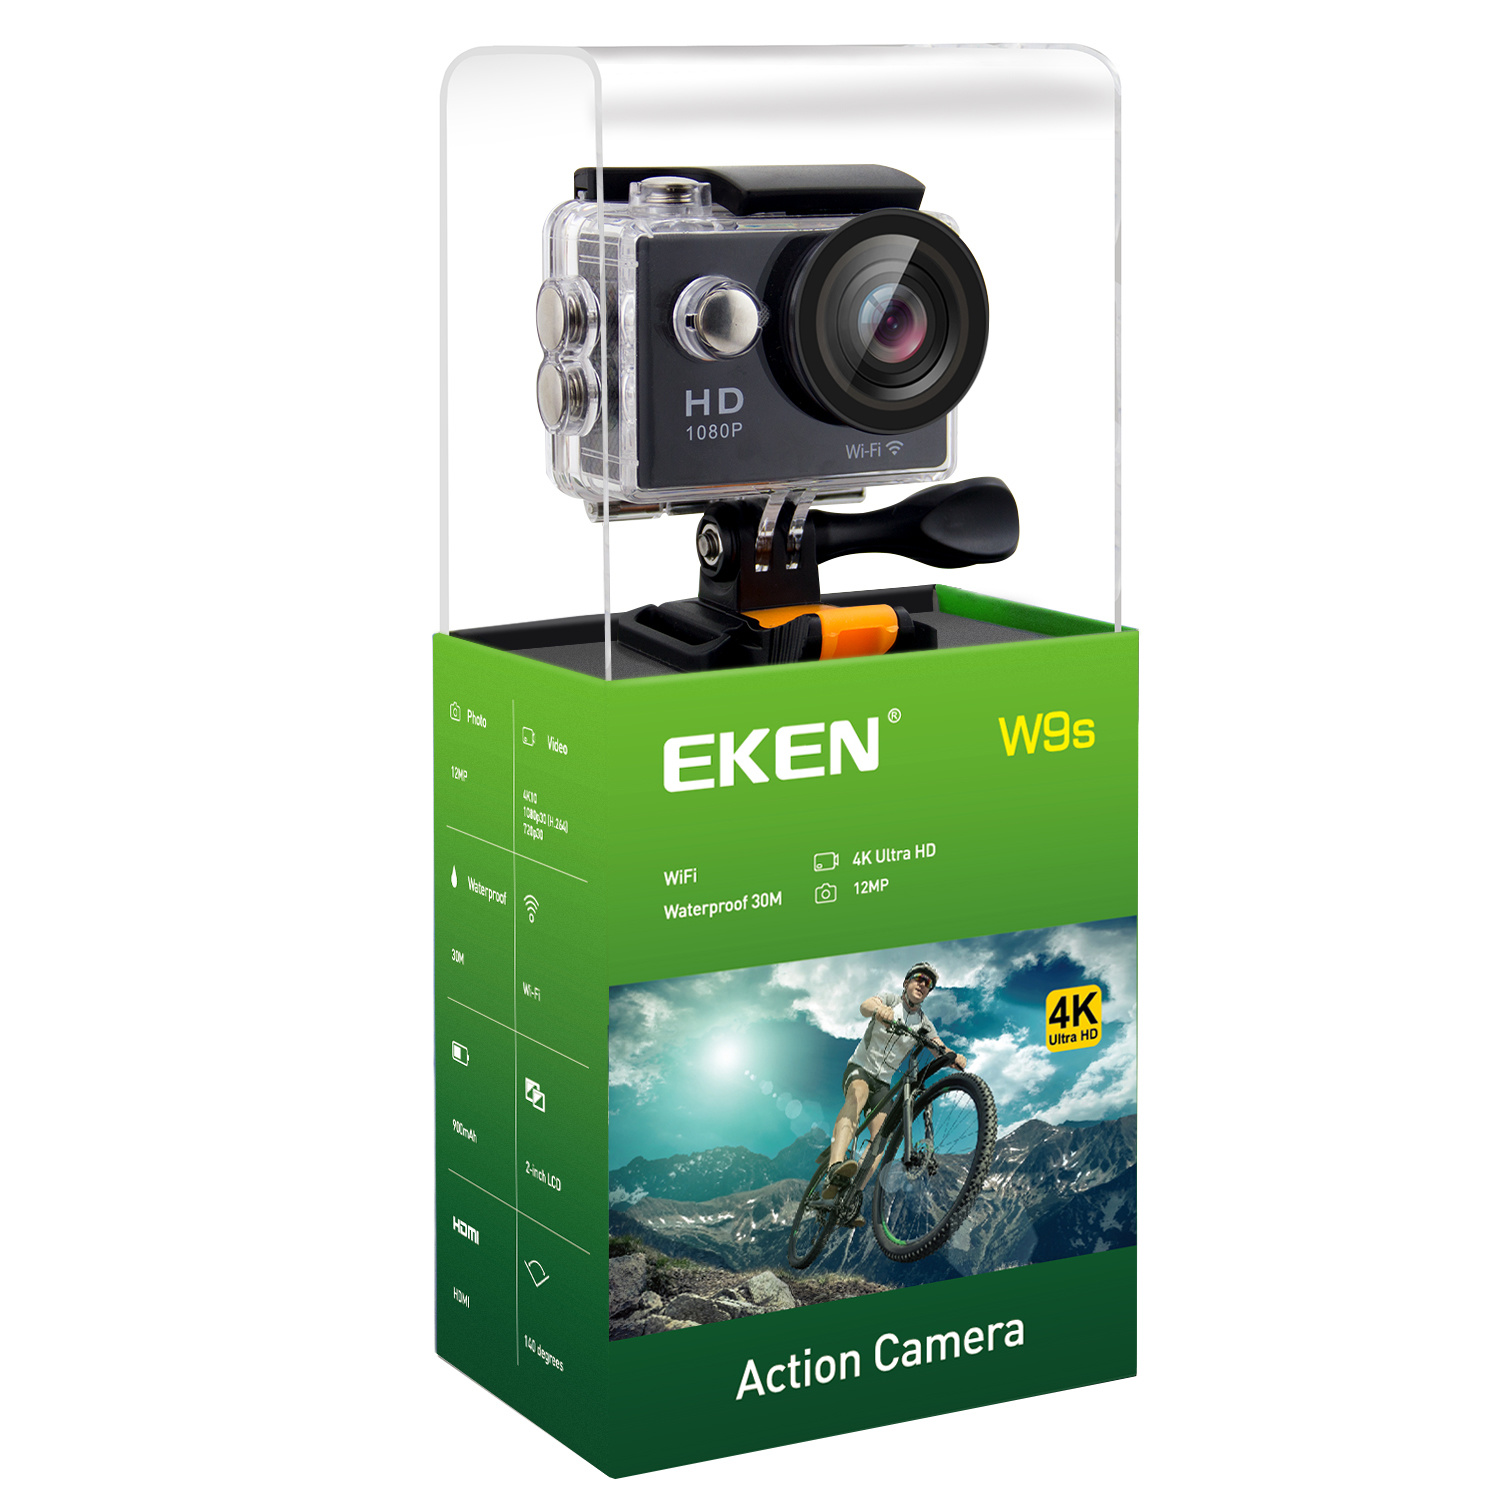 Eken W9S Action Camera